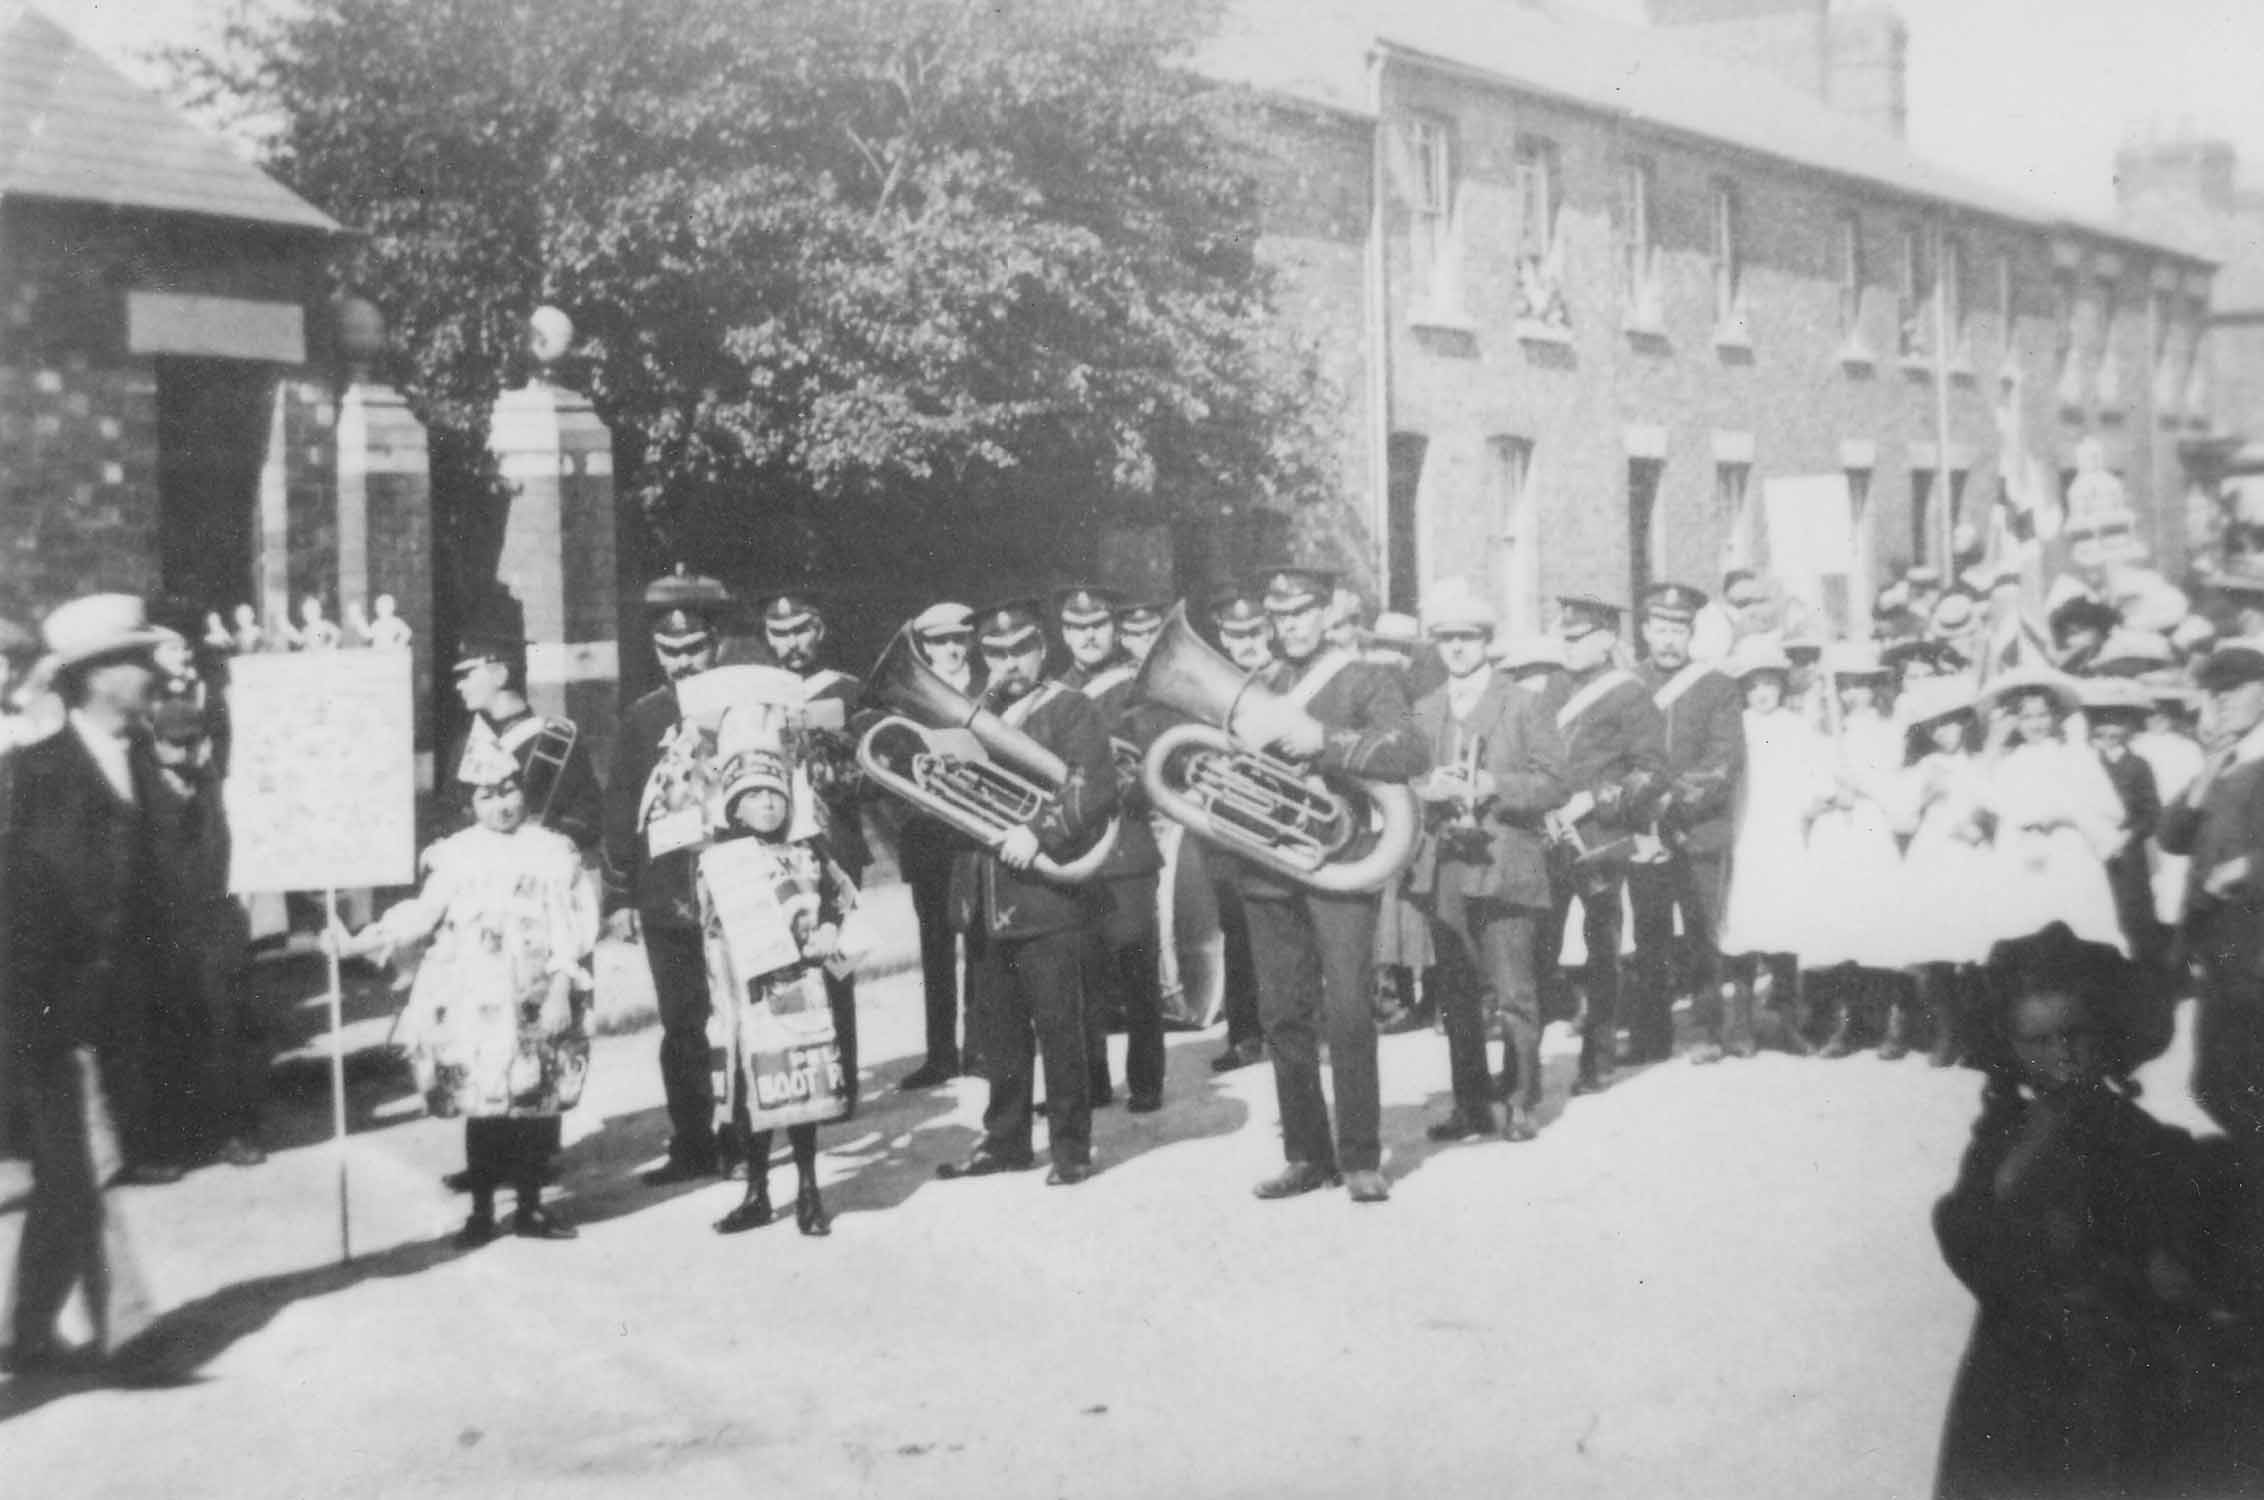 Milton Keynes Brass Band - Bradwell Silver Band